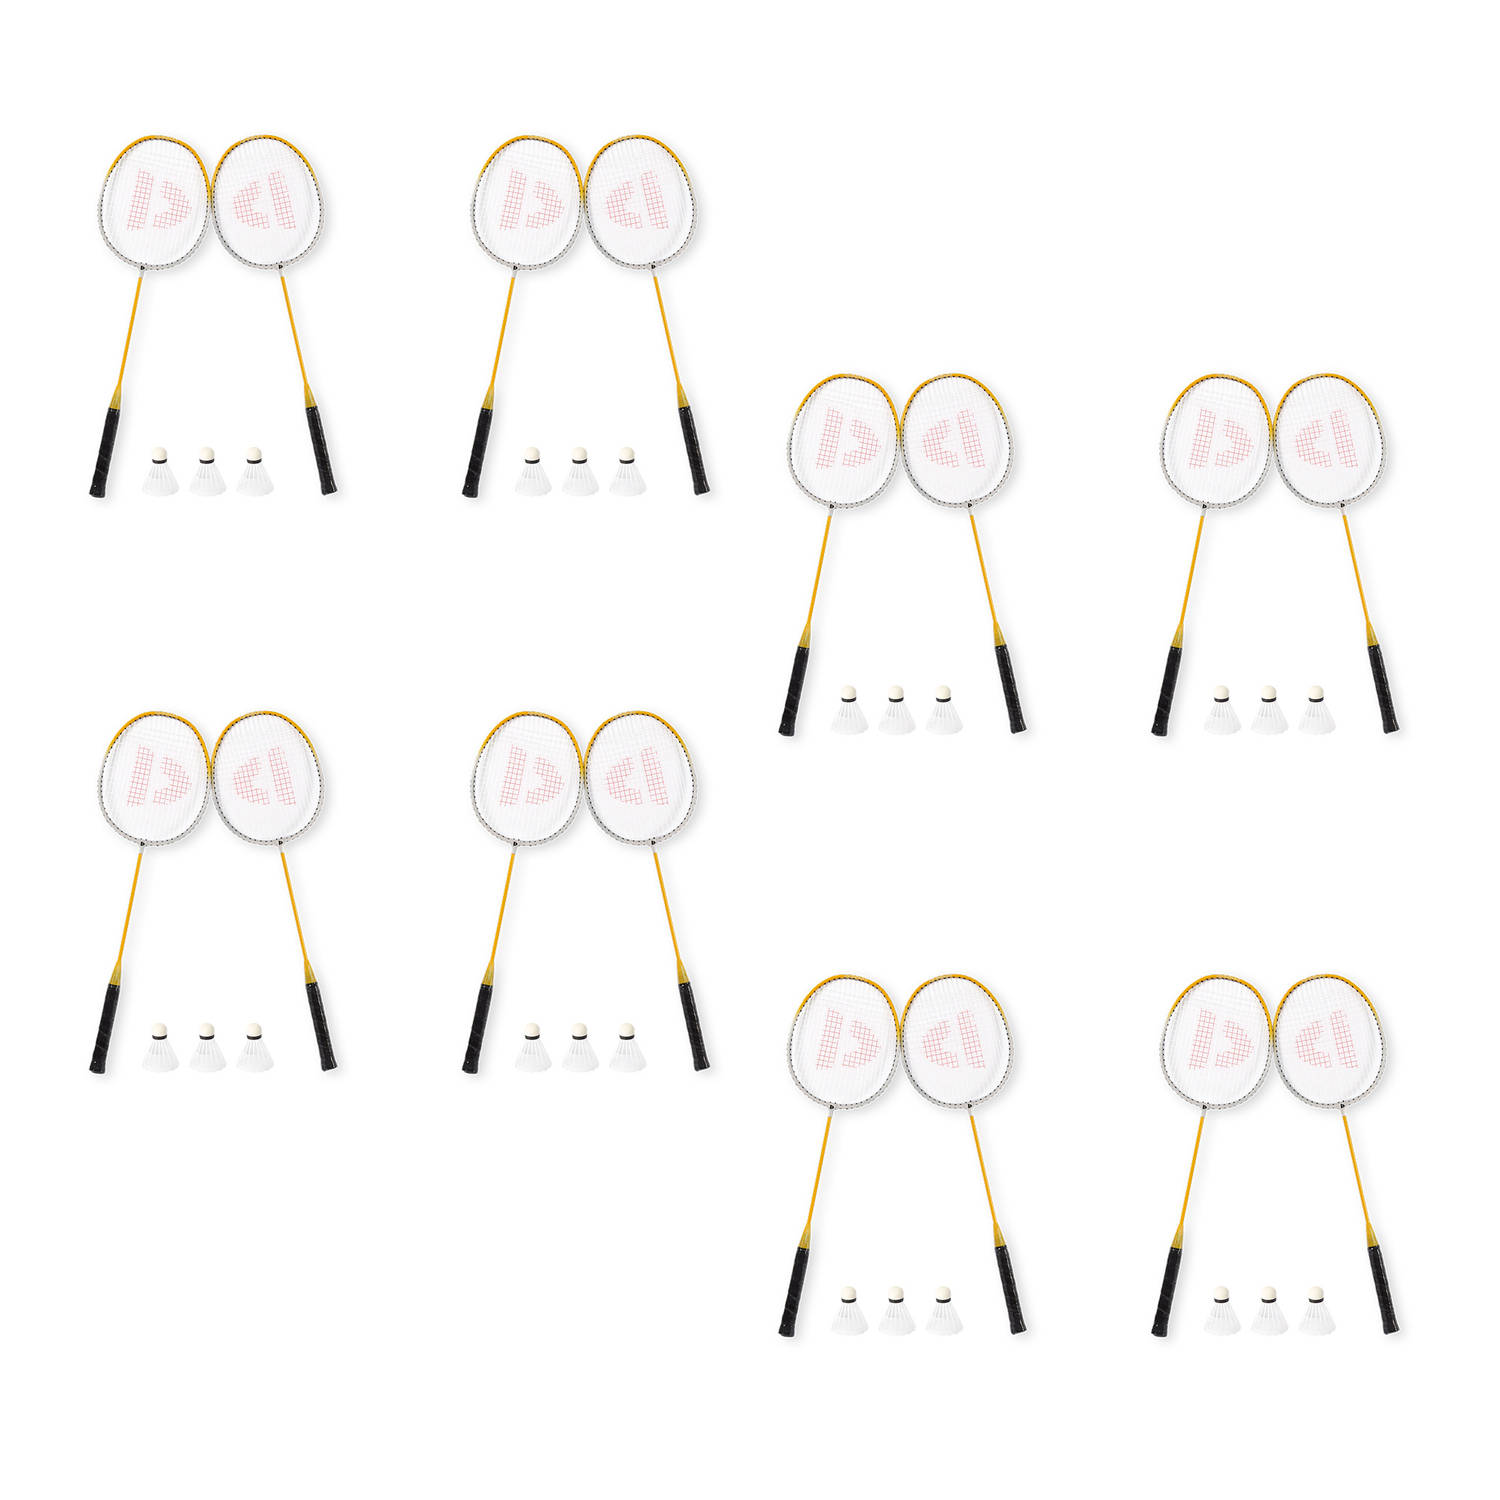 Voordelpak: Set van 8 Ultimate Badmintonset | 16x Aluminium Badminton Rackets | 24x Bio Plastic Shuttles | Geel | Inclusief Draagtas met elke Set